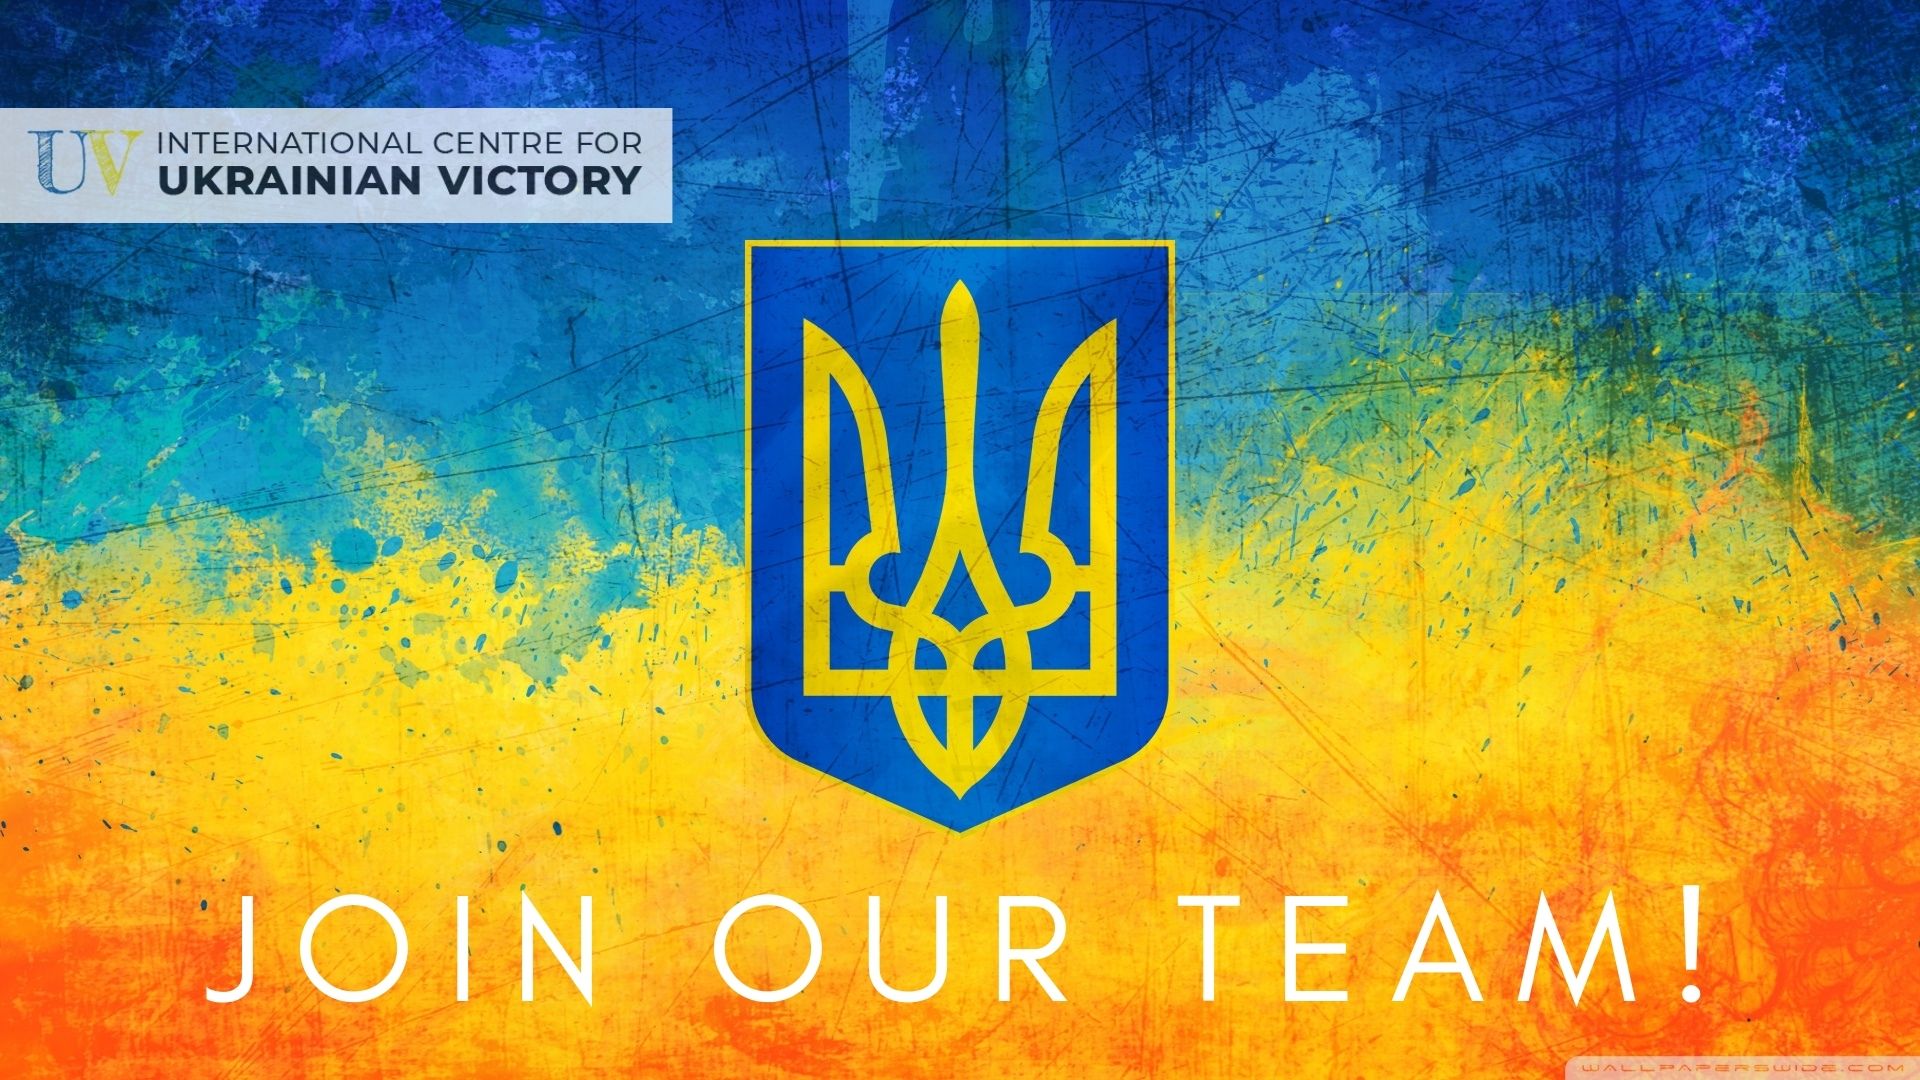 Executive Director – International Centre for Ukrainian Victory